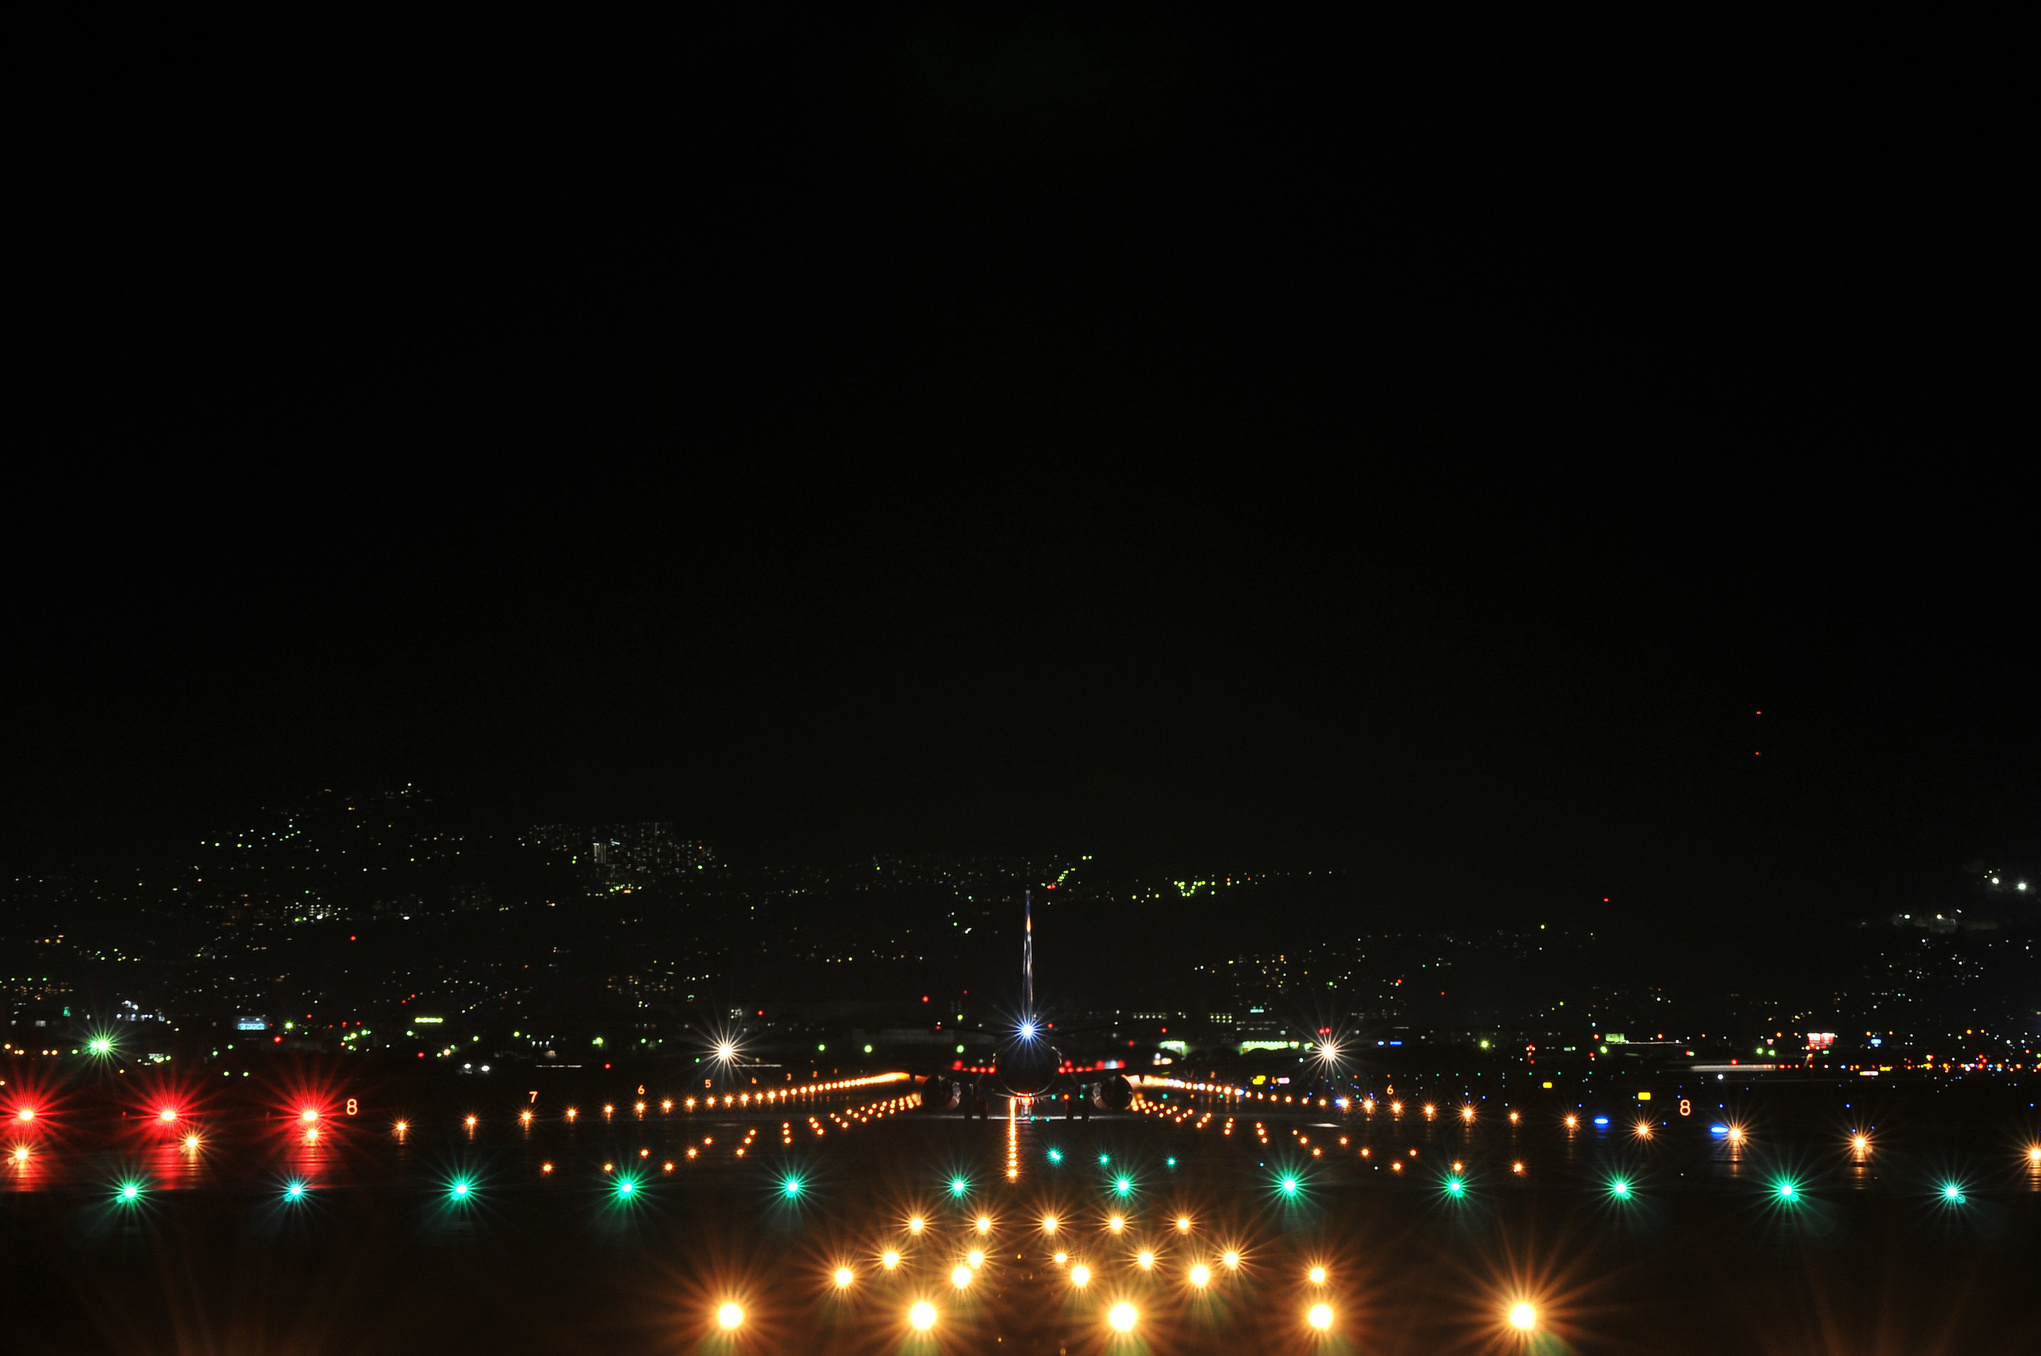 Beautiful night view of the airport runway